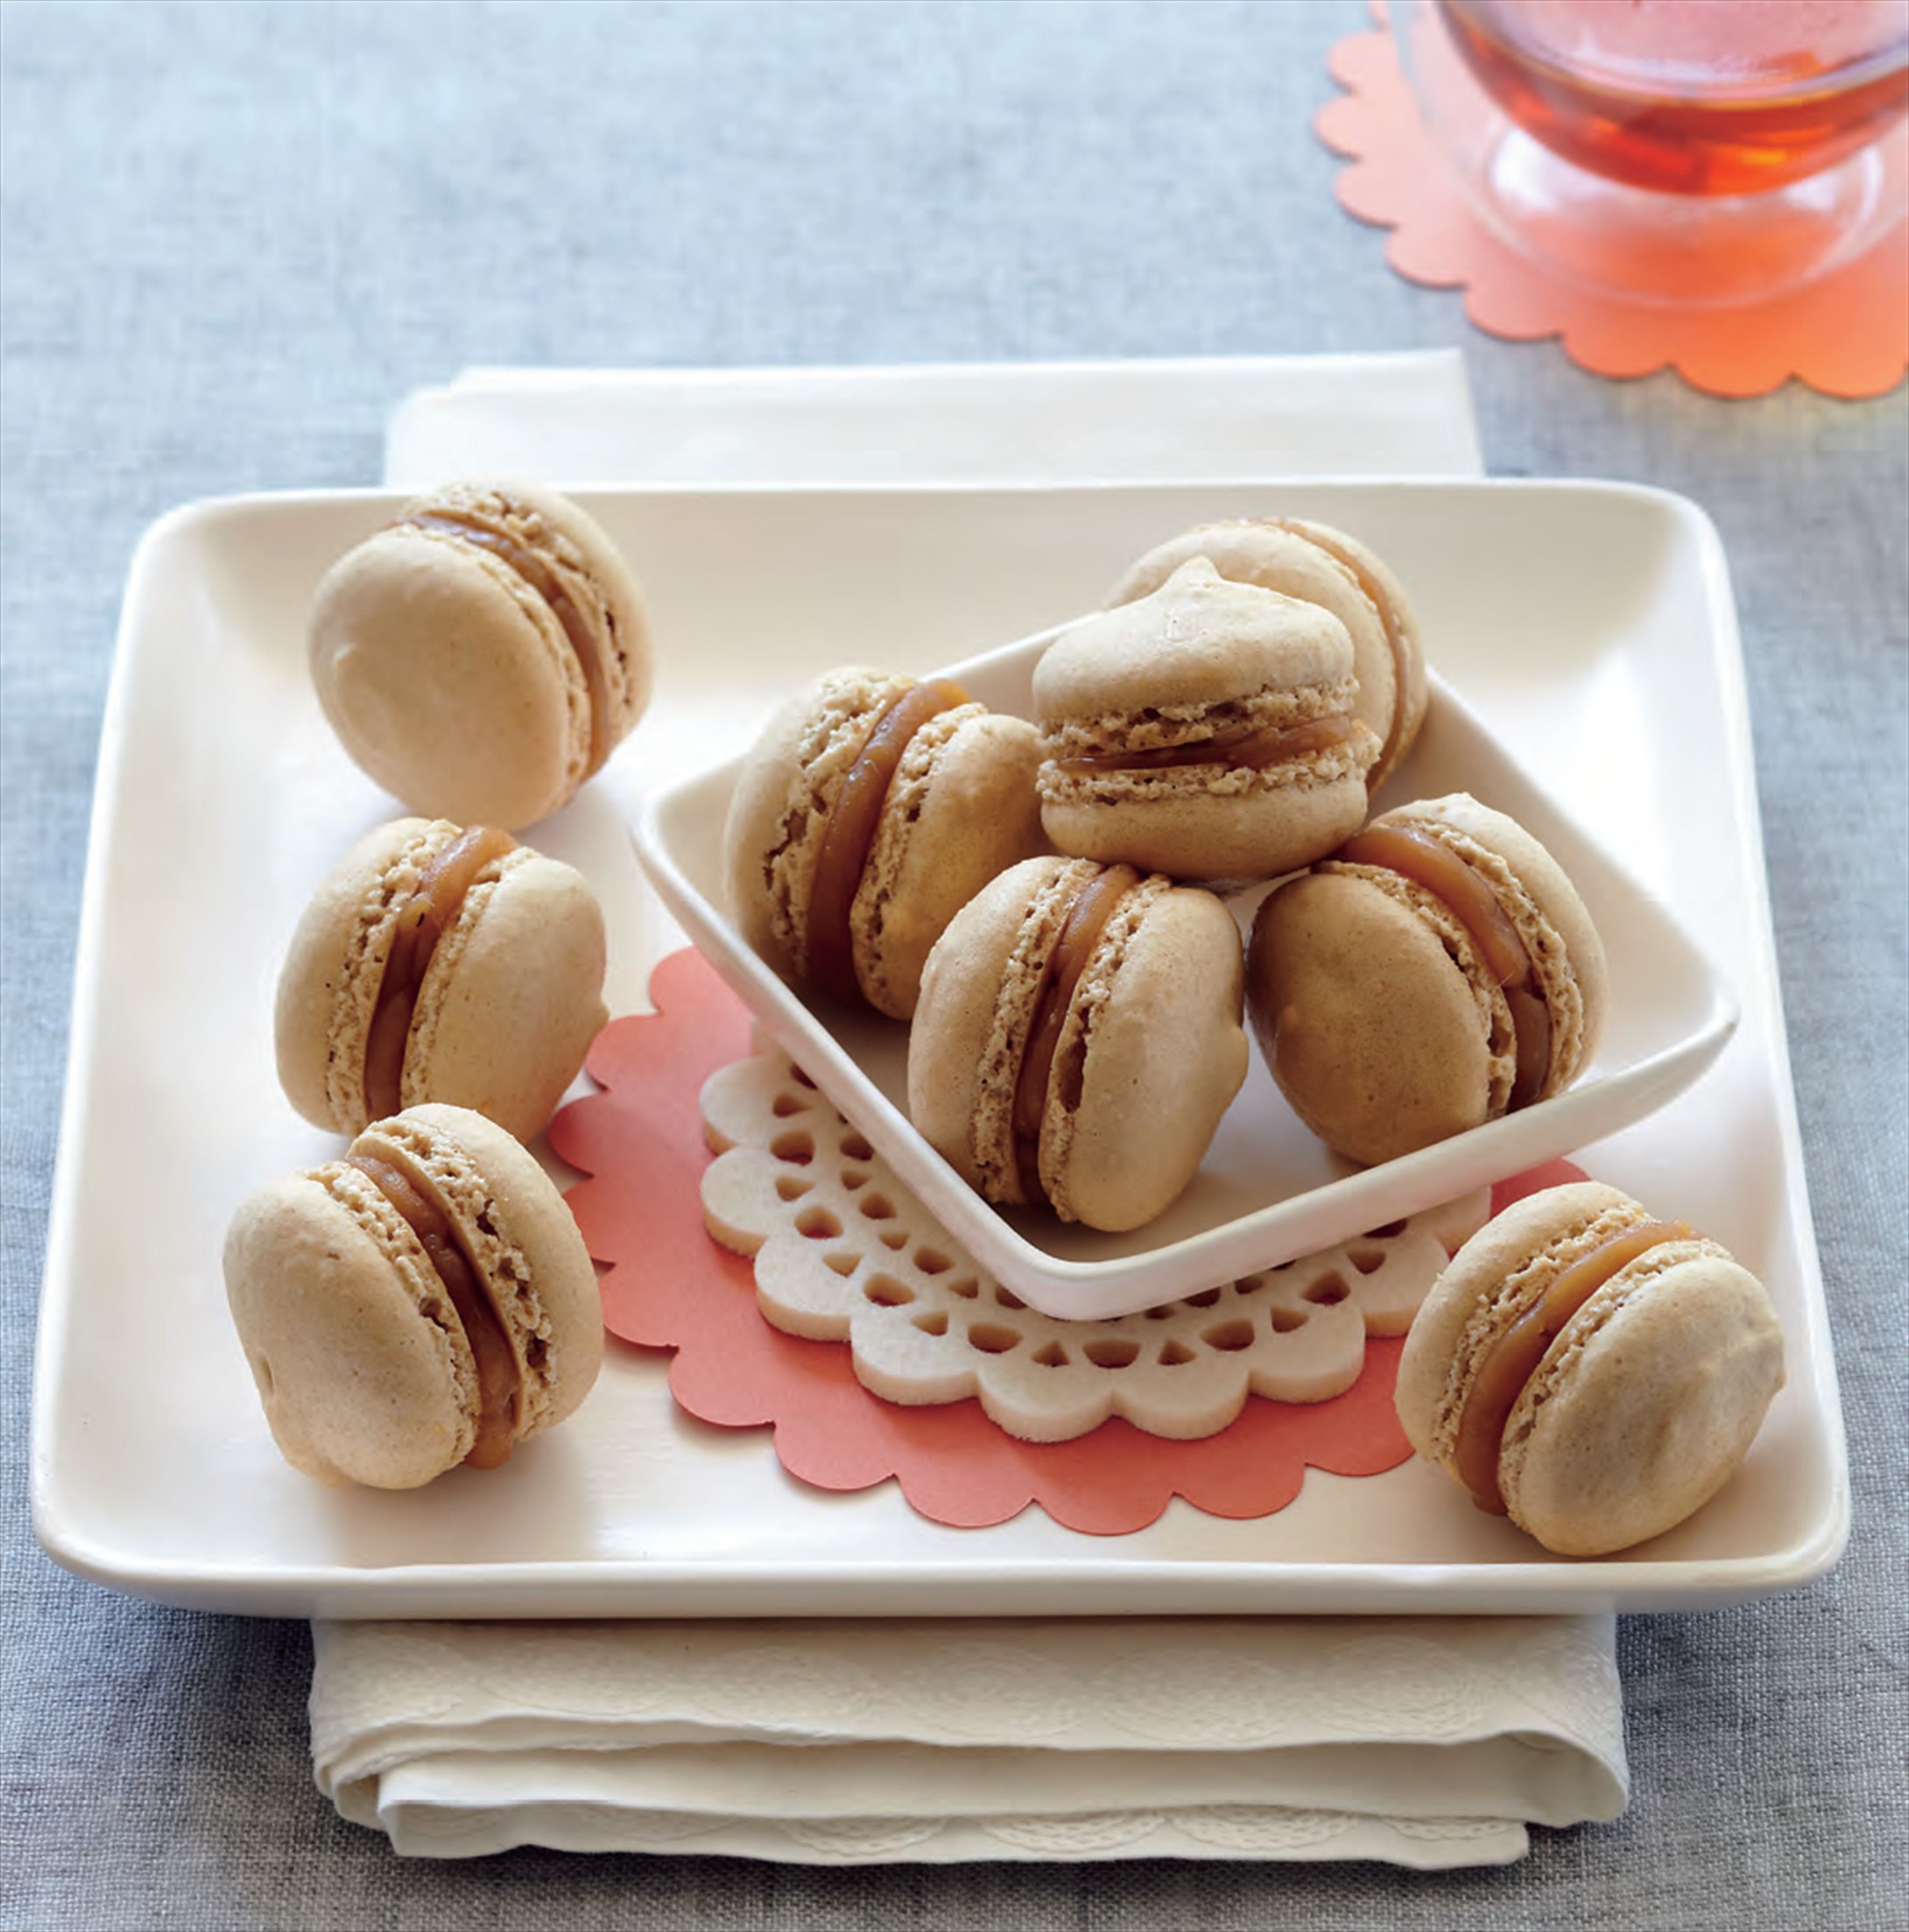 Peanut macarons with salted caramel